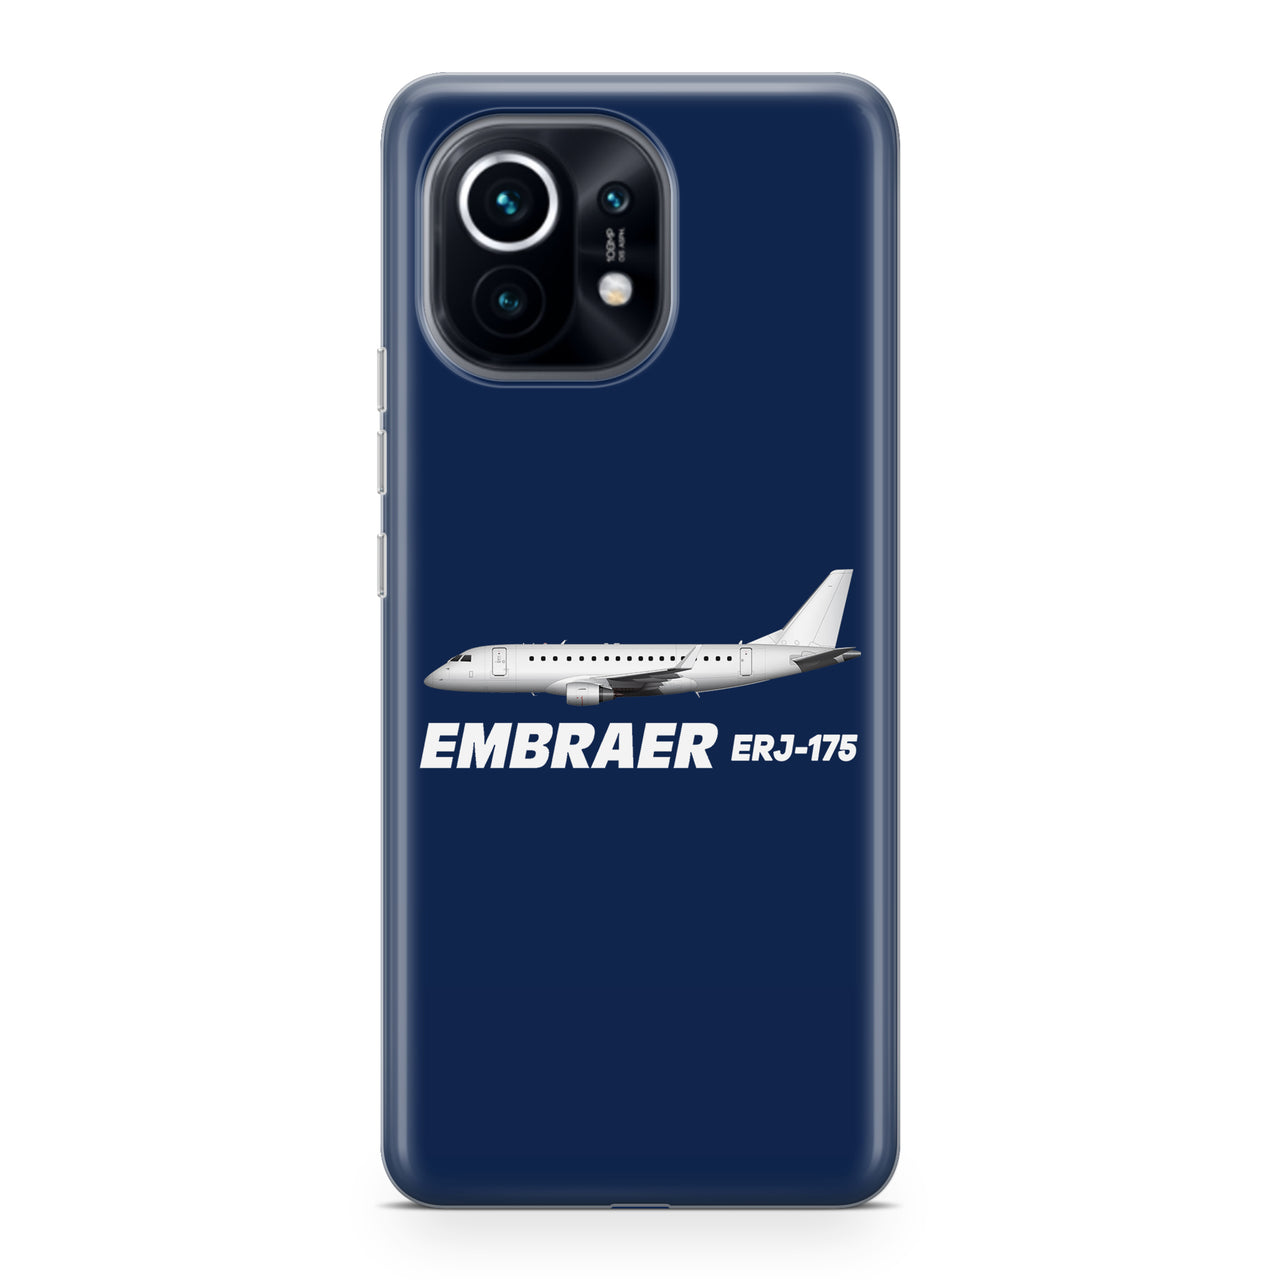 The Embraer ERJ-175 Designed Xiaomi Cases